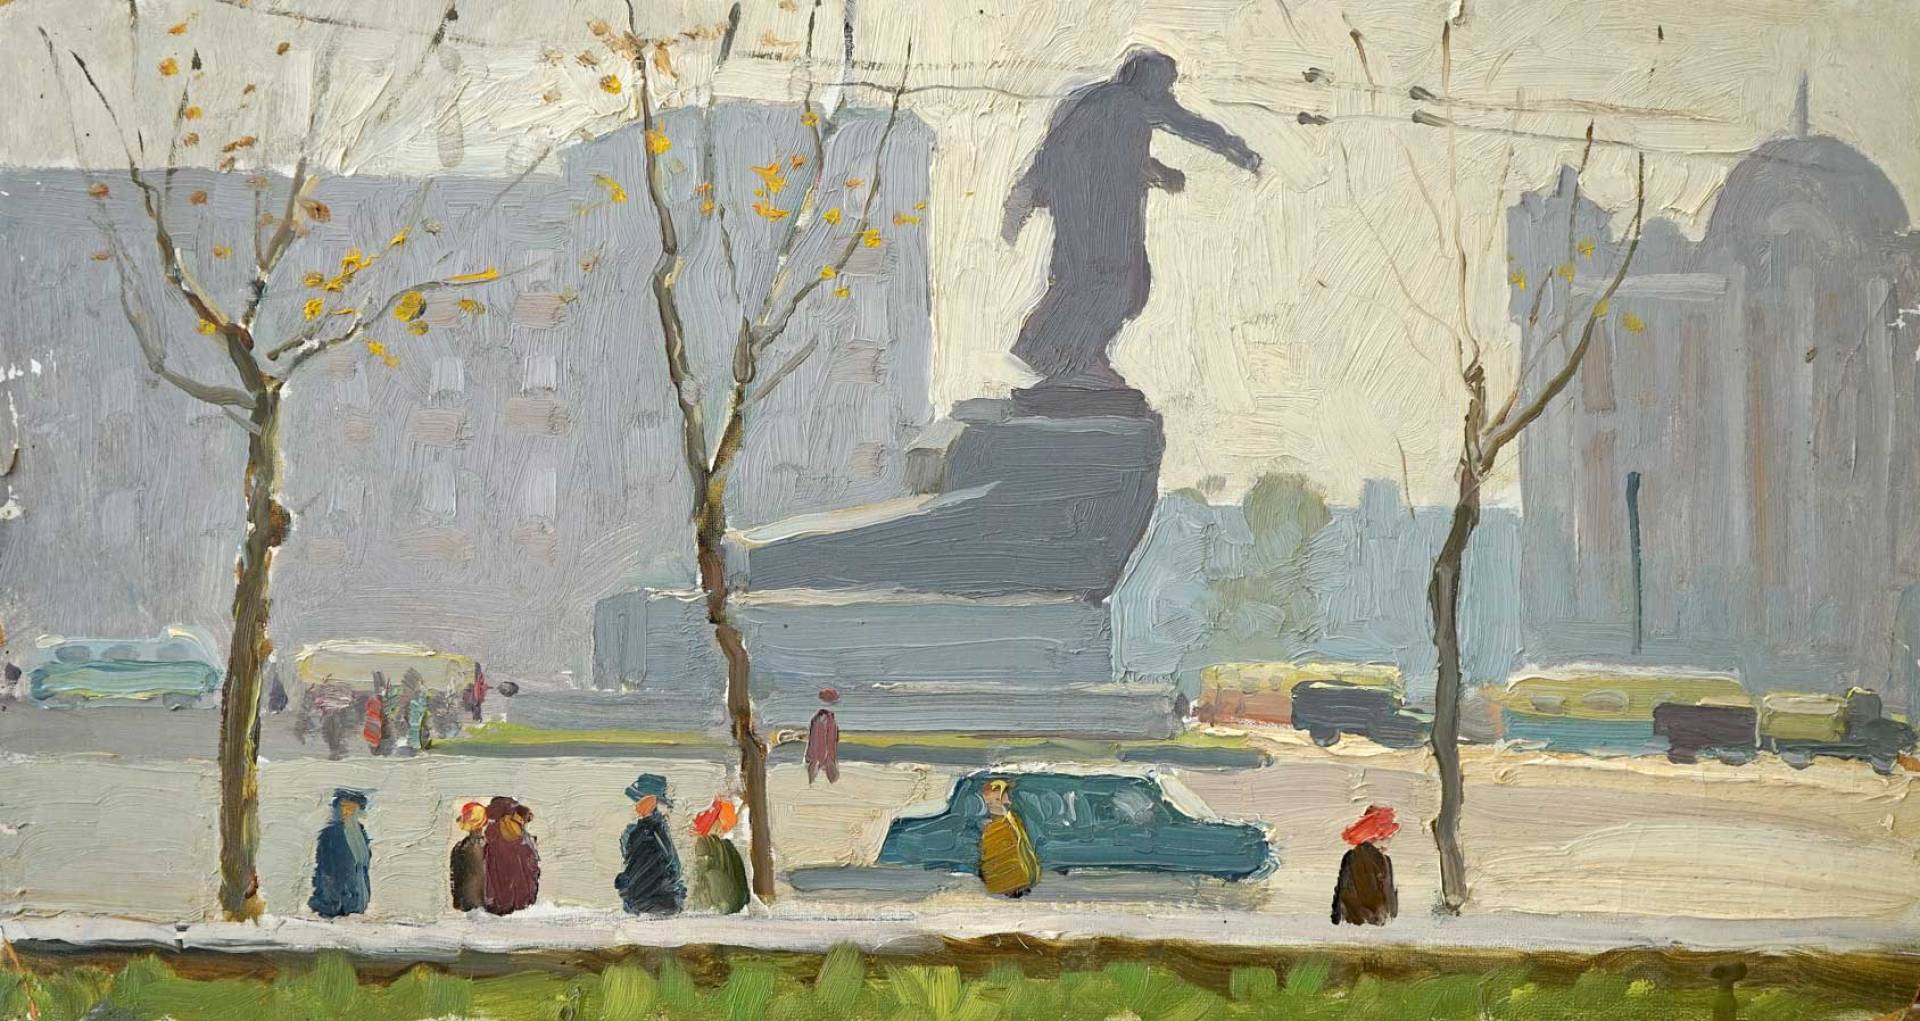 Station Square - 1, Boris Glushkov, Buy the painting Oil